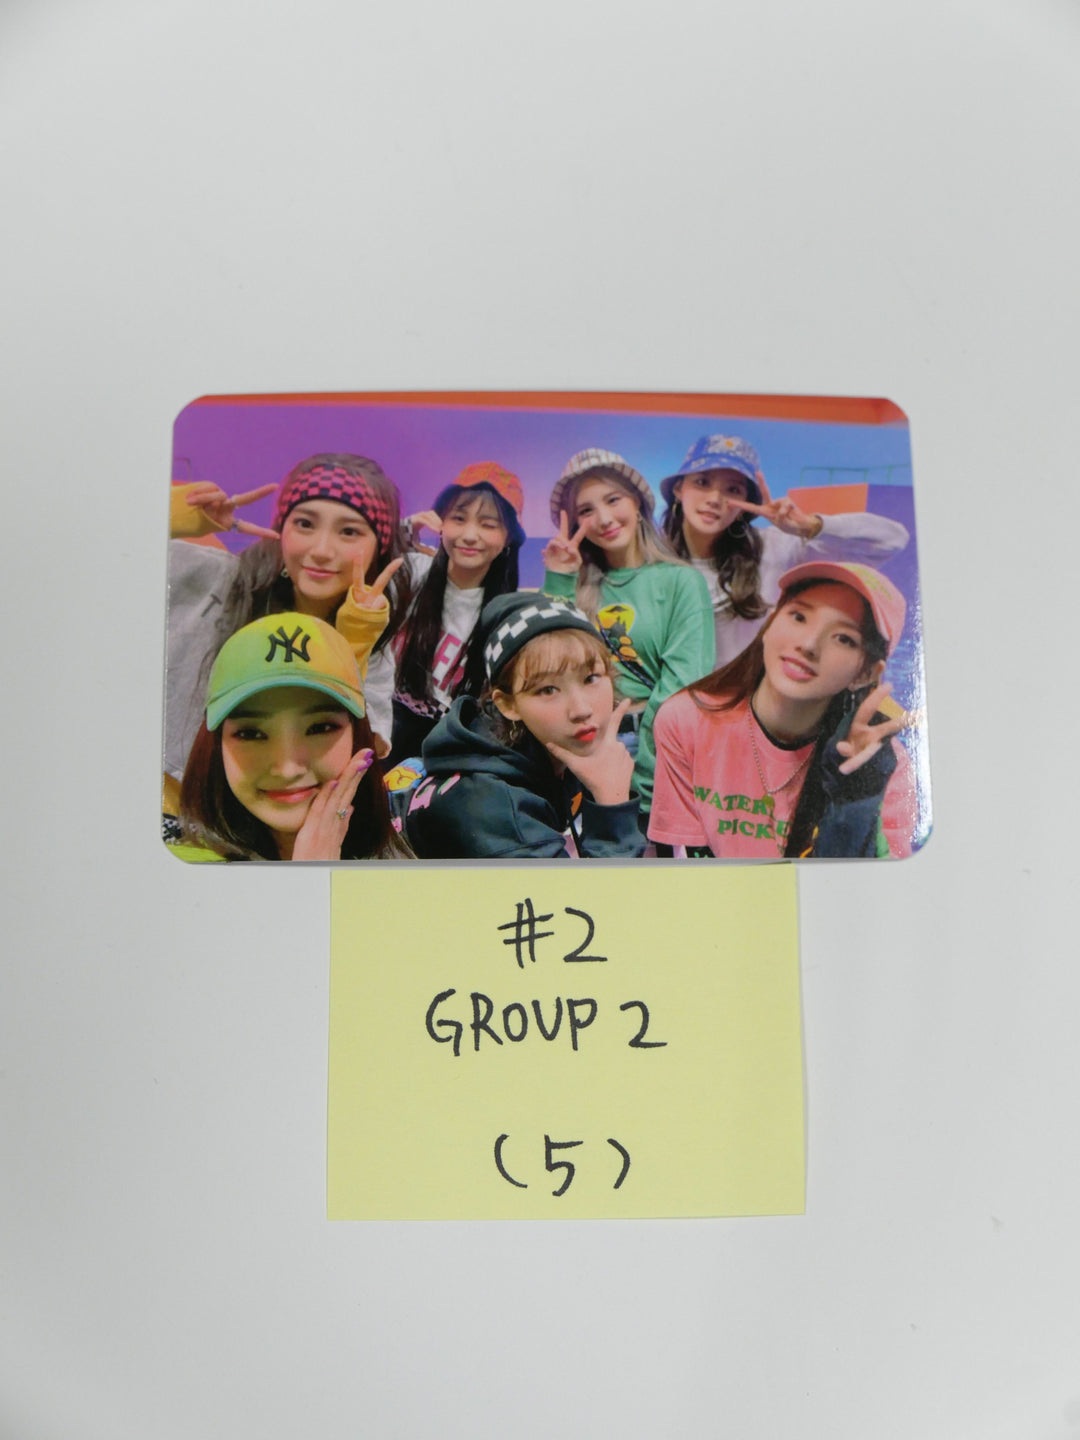 Weeekly "We Play" 미니 3집 - 공식 포토카드 (3.31 업데이트)